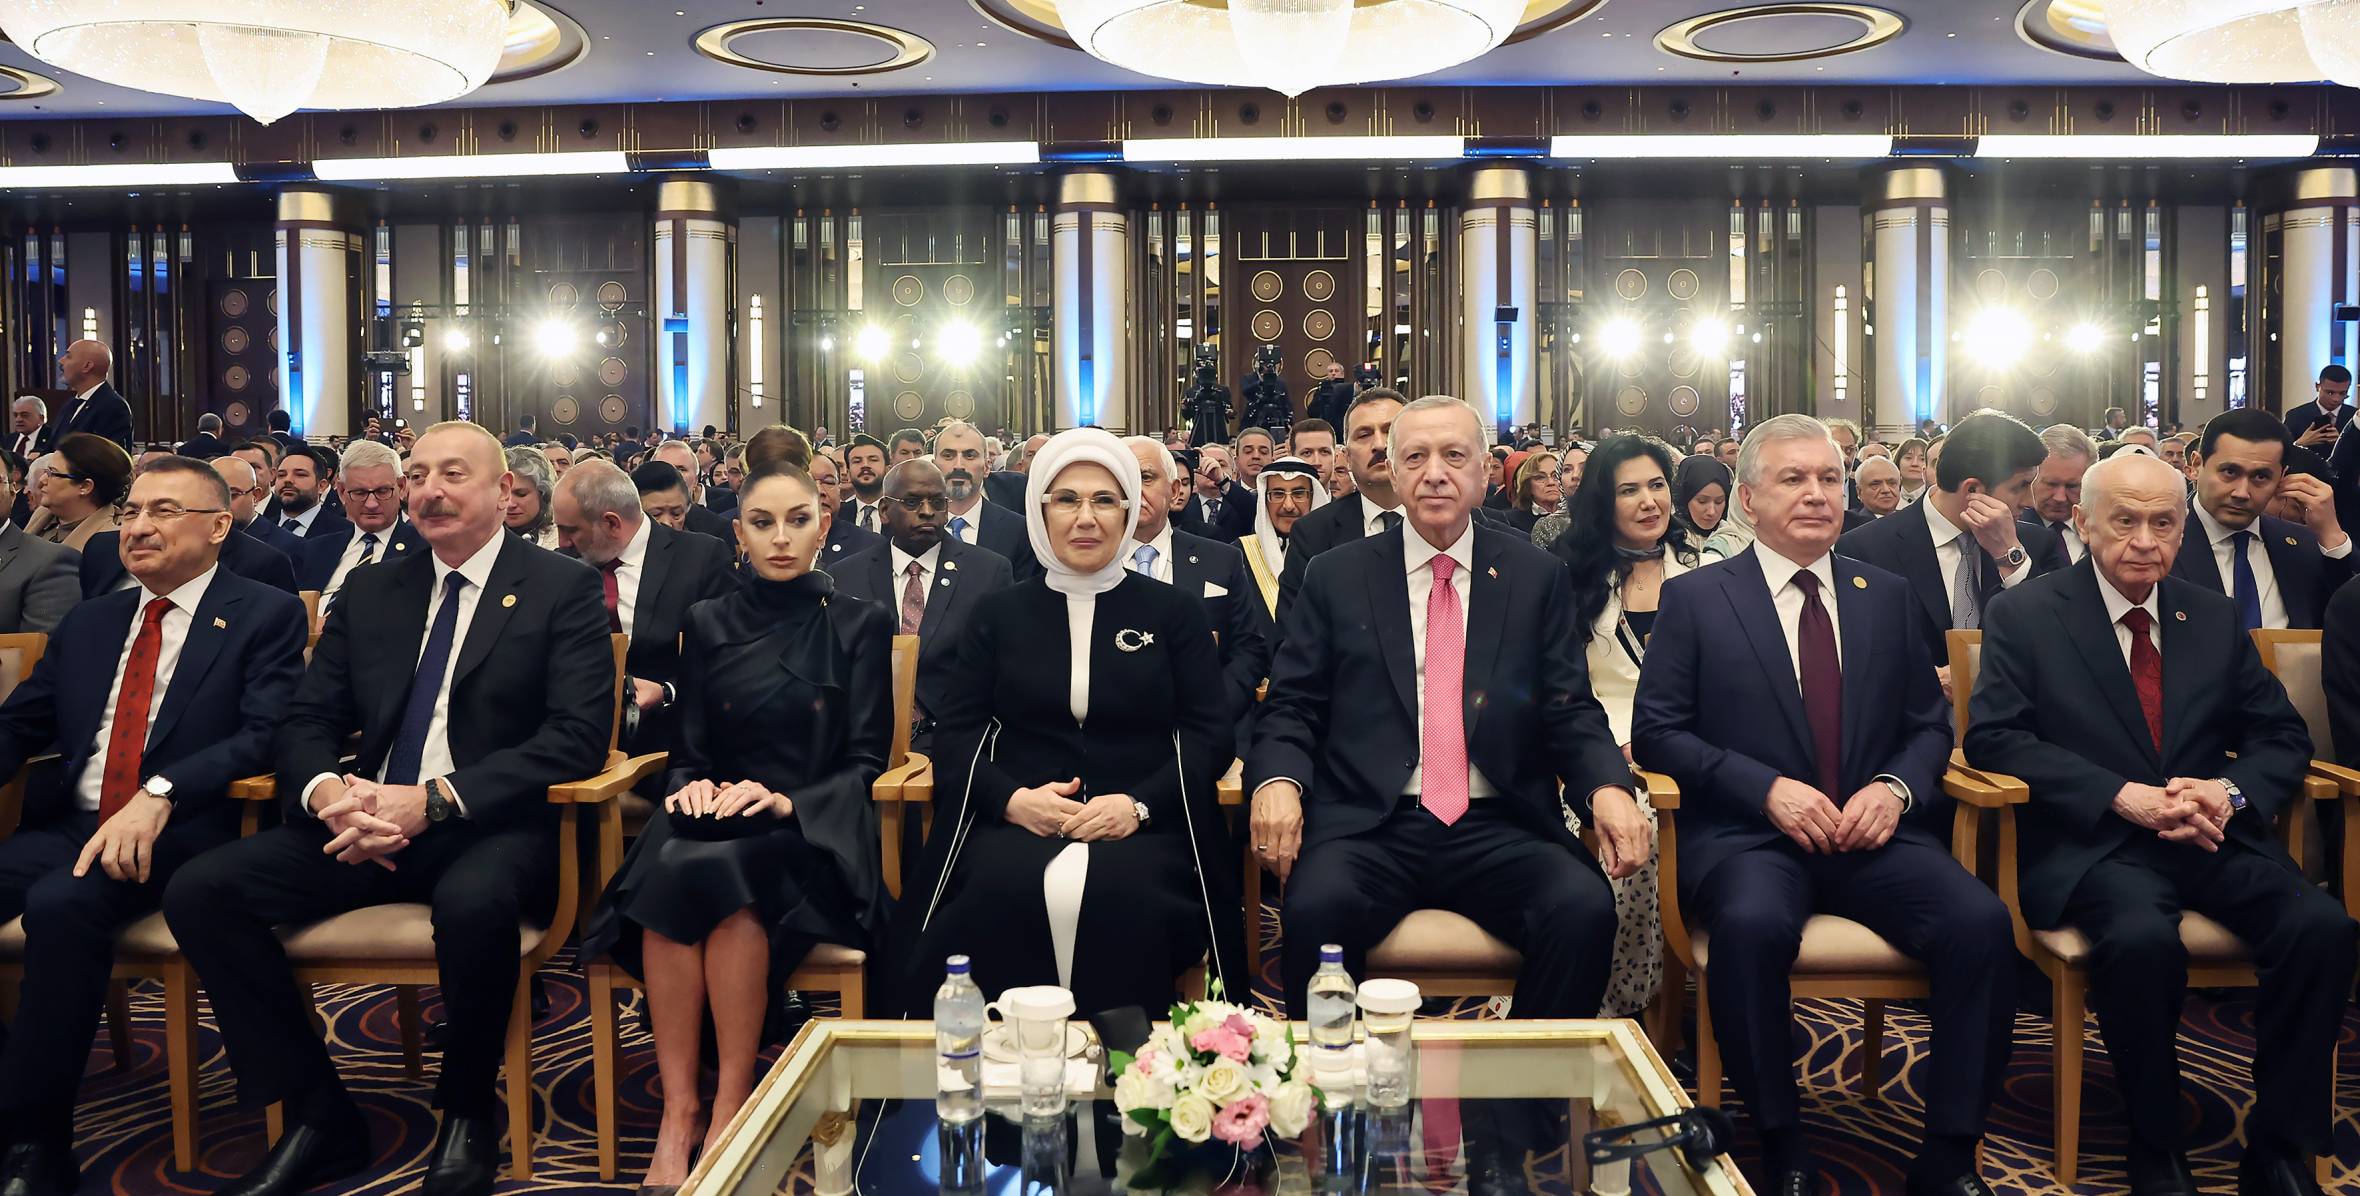 Ilham Aliyev, First Lady Mehriban Aliyeva attended swearing-in ceremony of President Recep Tayyip Erdogan in Ankara